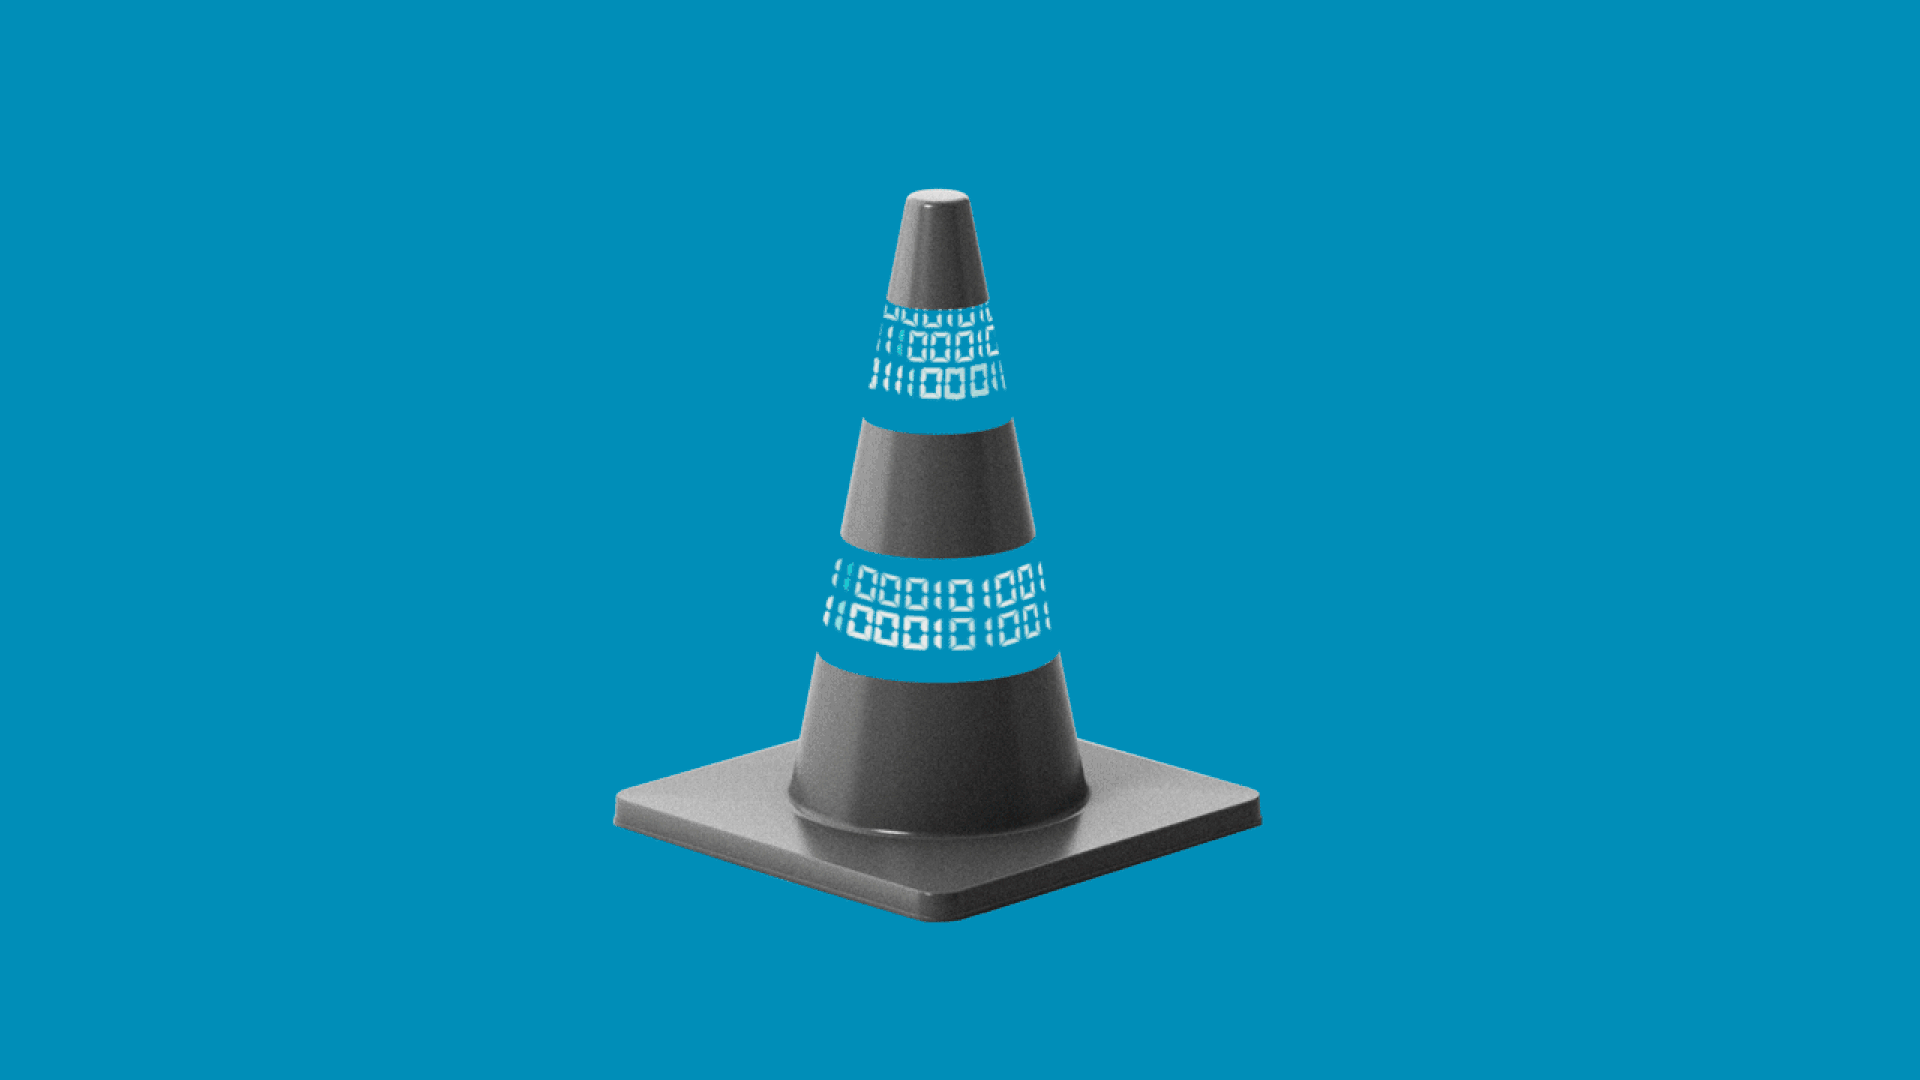 traffic cone with flashing binary code